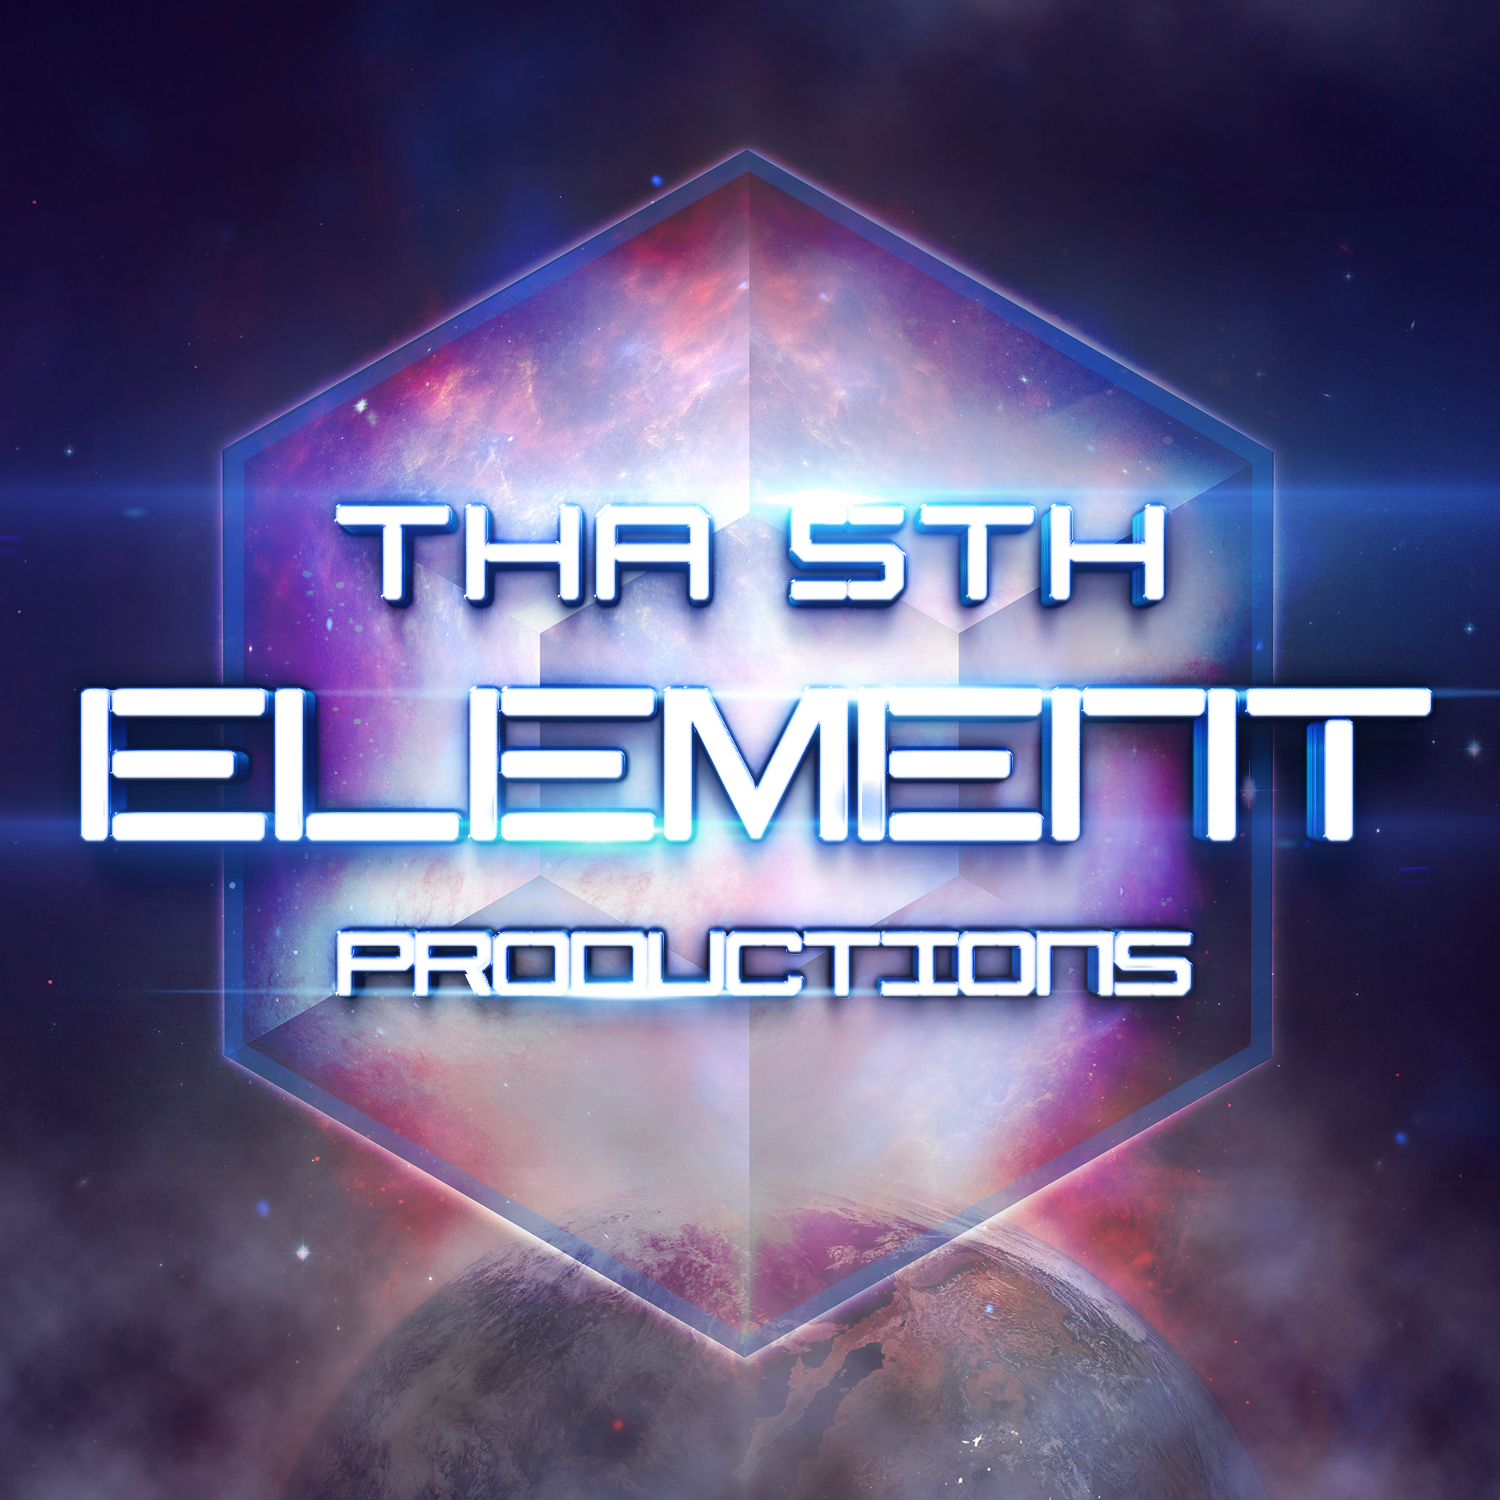 Tha 5th Element Production